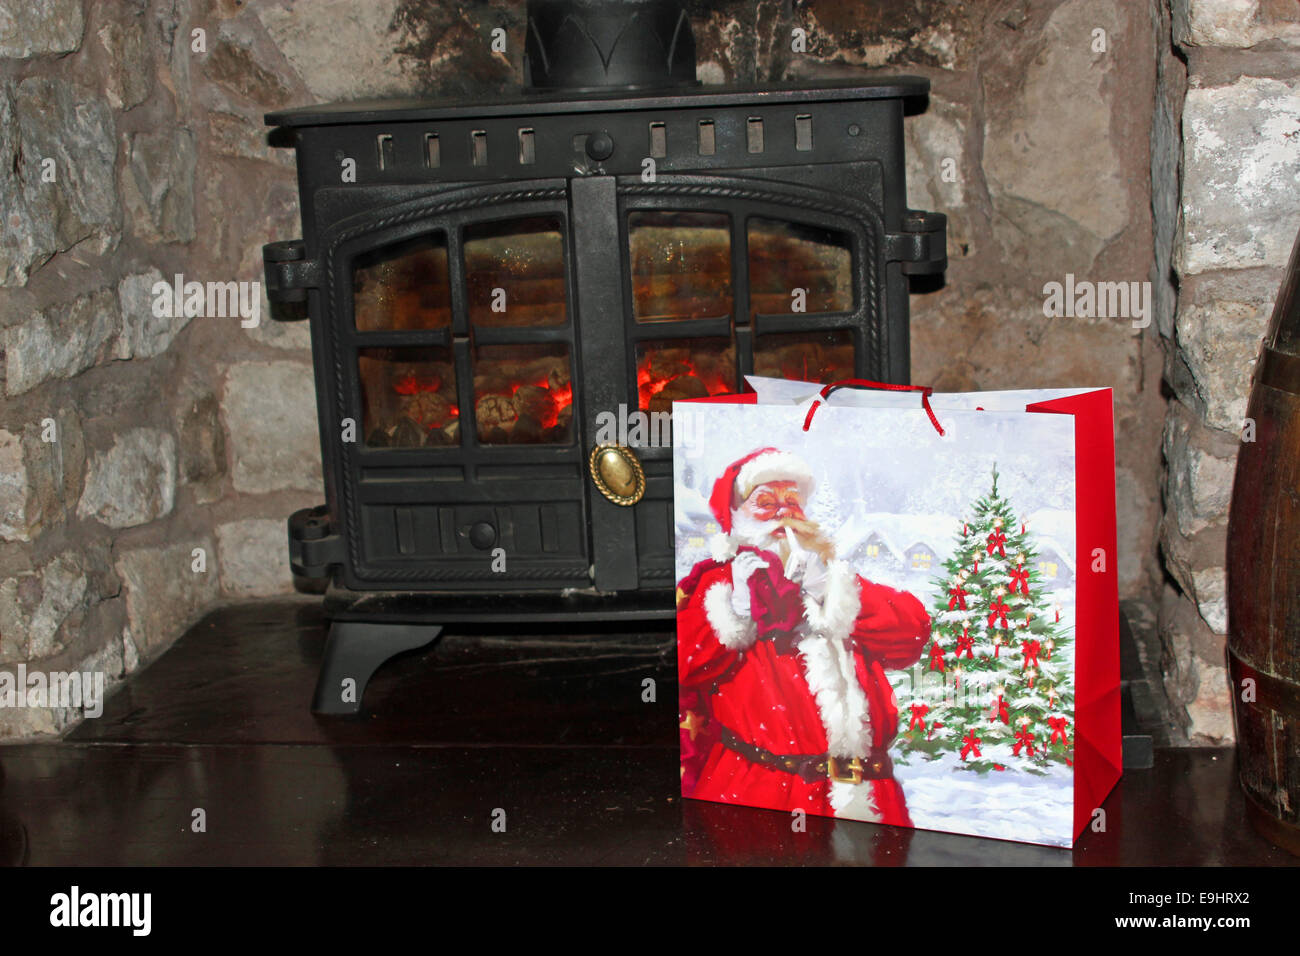 Christmas present in a Santa bag front of a log burner Stock Photo